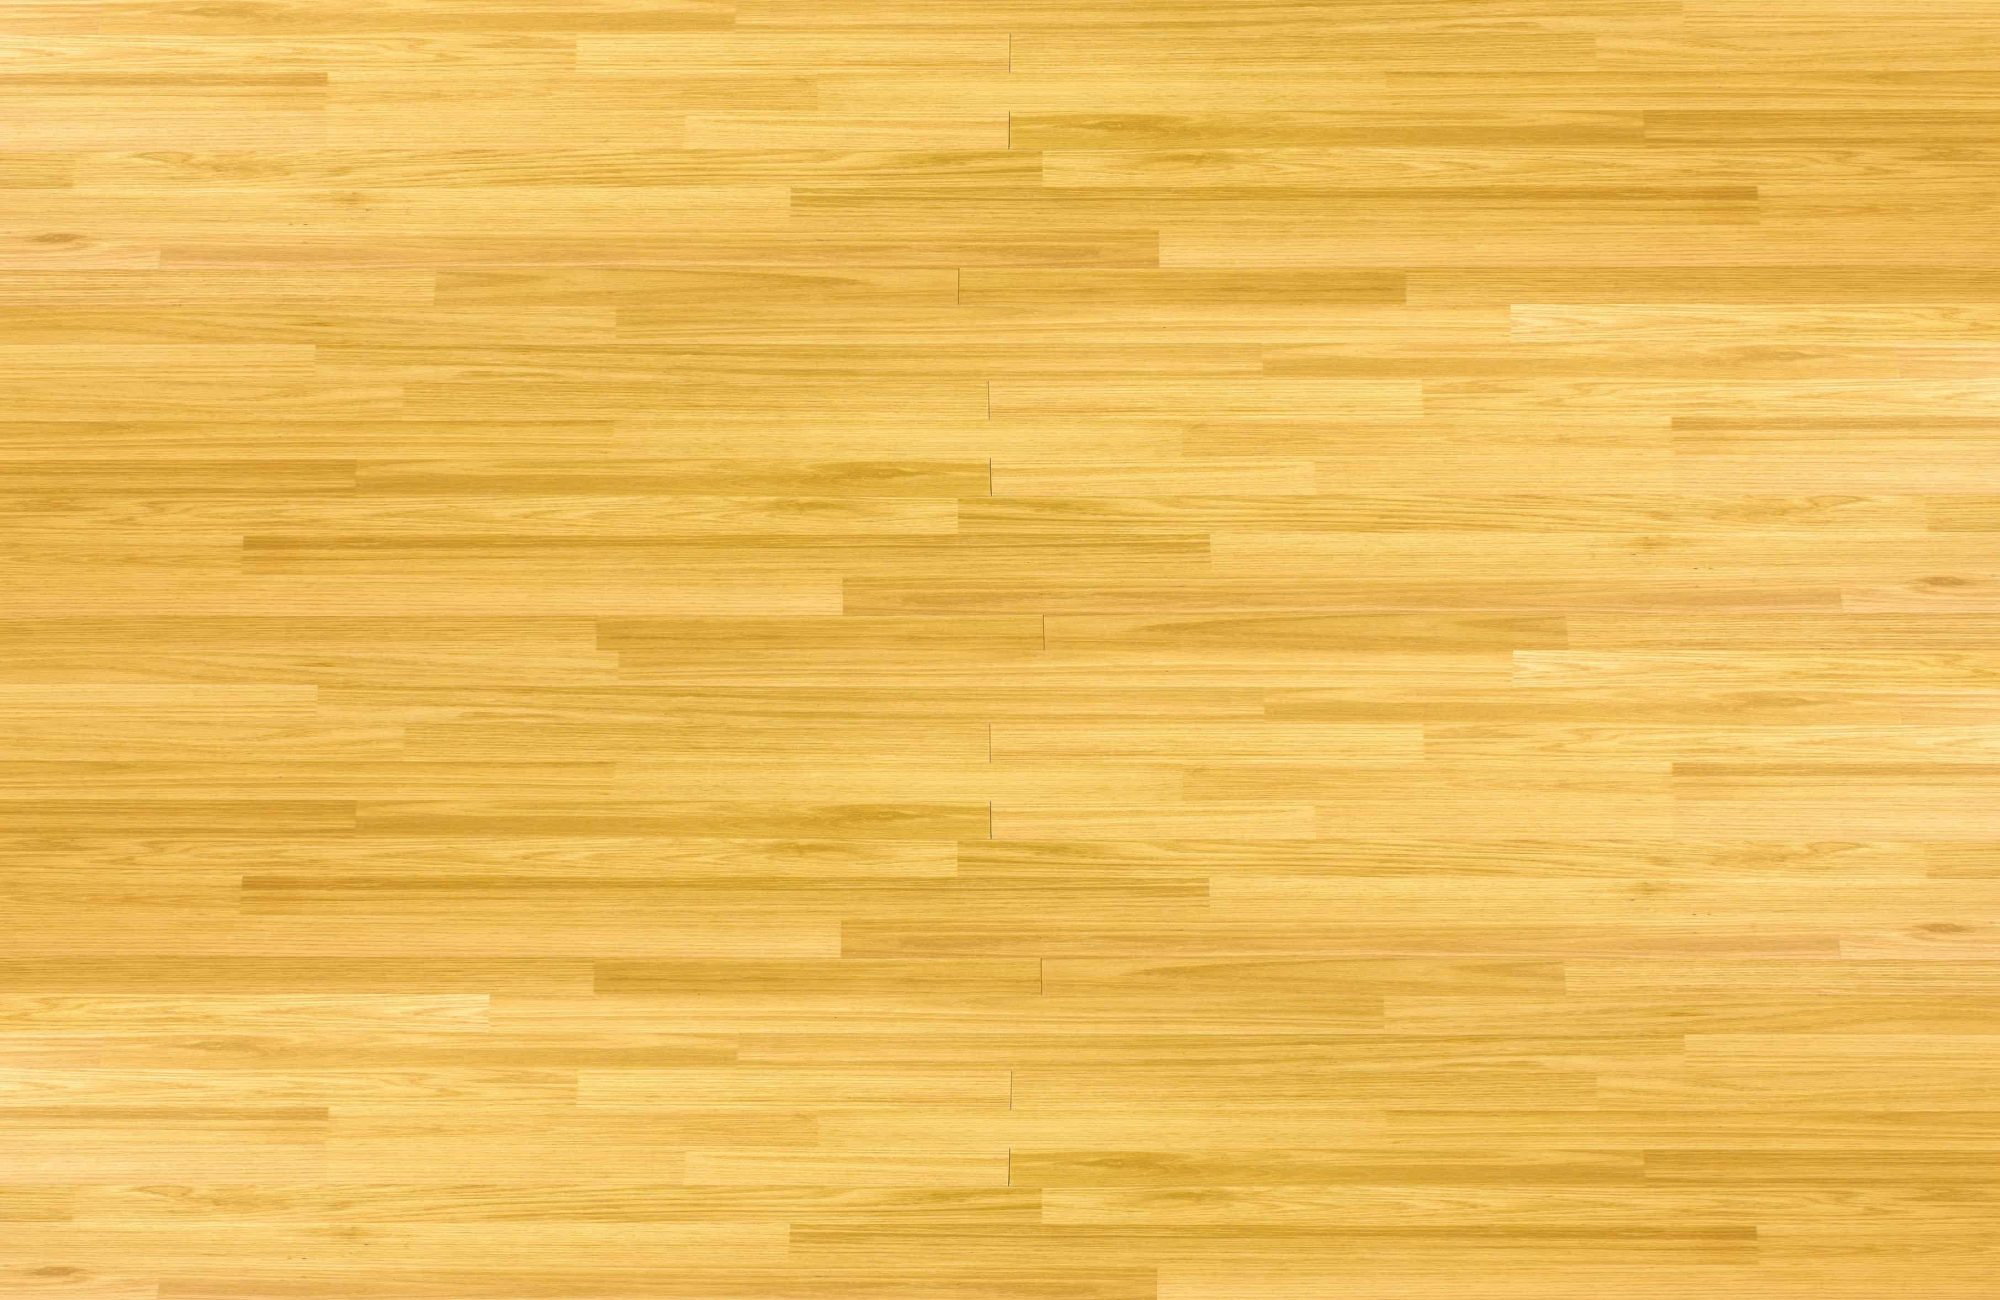 Maple Flooring Hard Enough To Bowl On, Hardwood Flooring Suppliers Denver Co